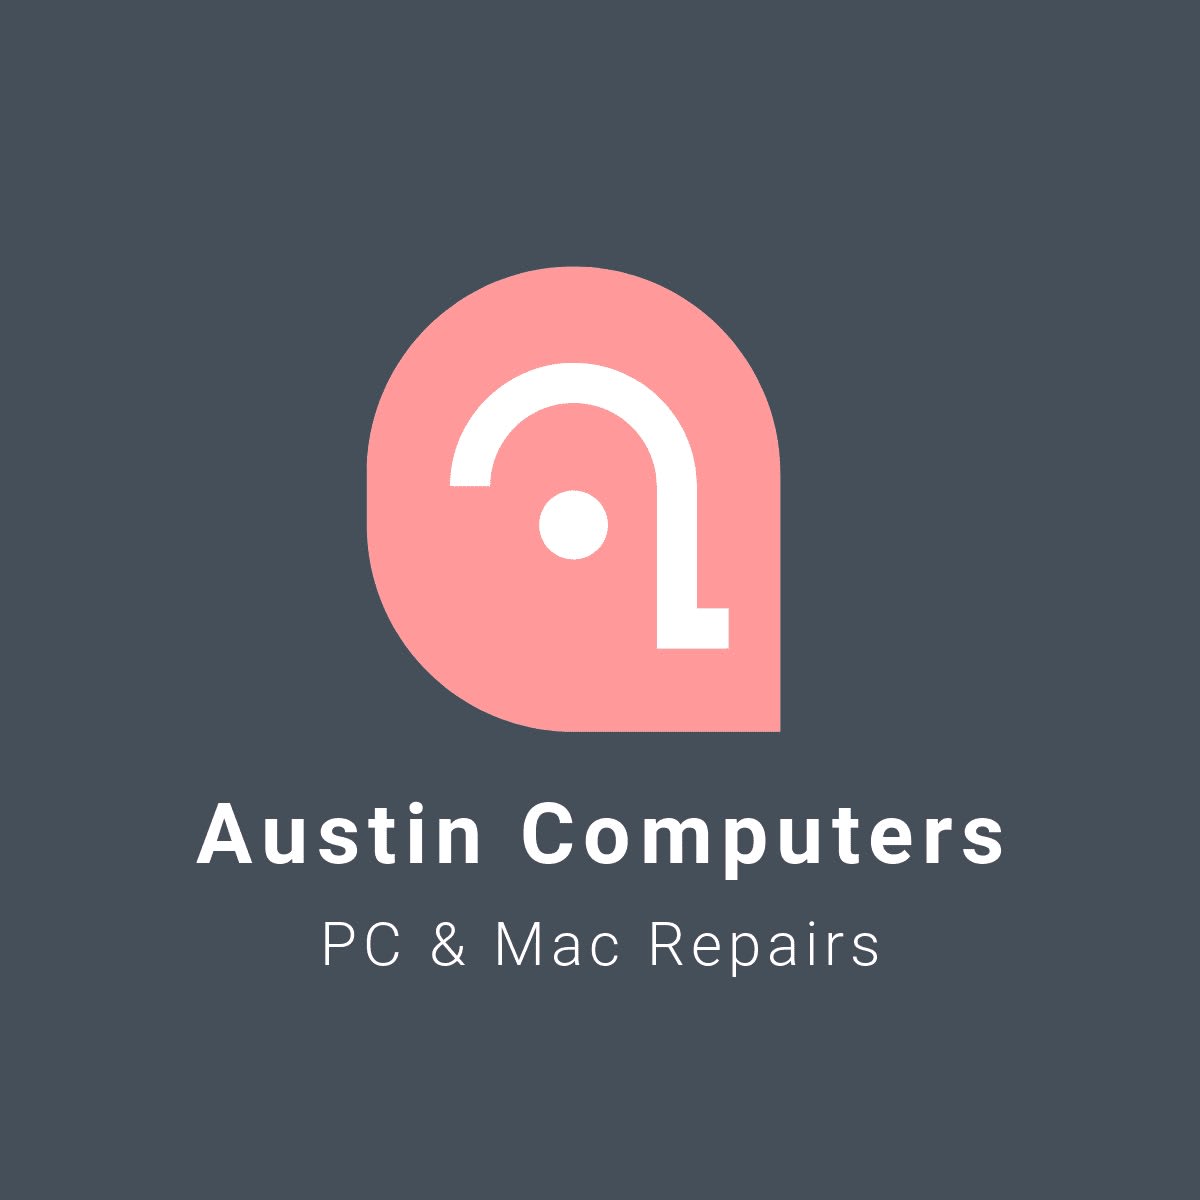 Austin Computers